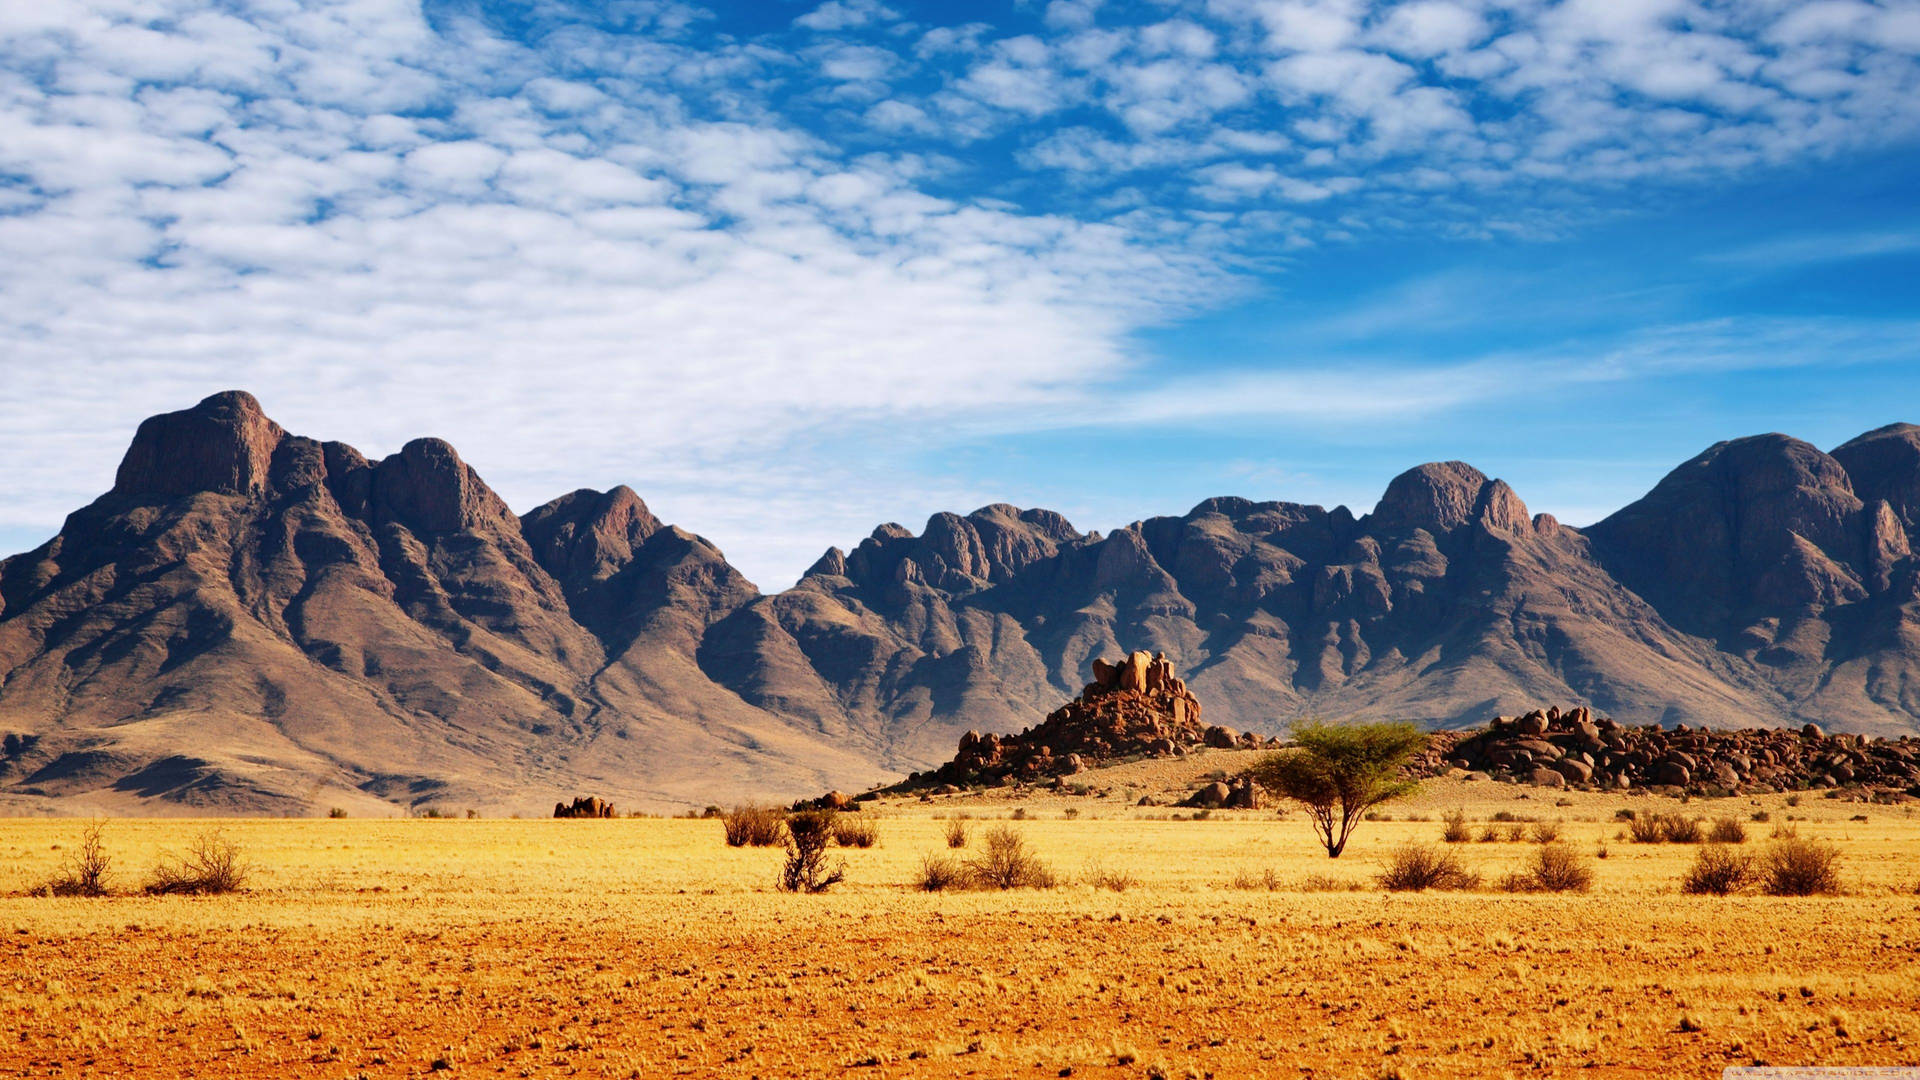 Desert Near High Mountains Background